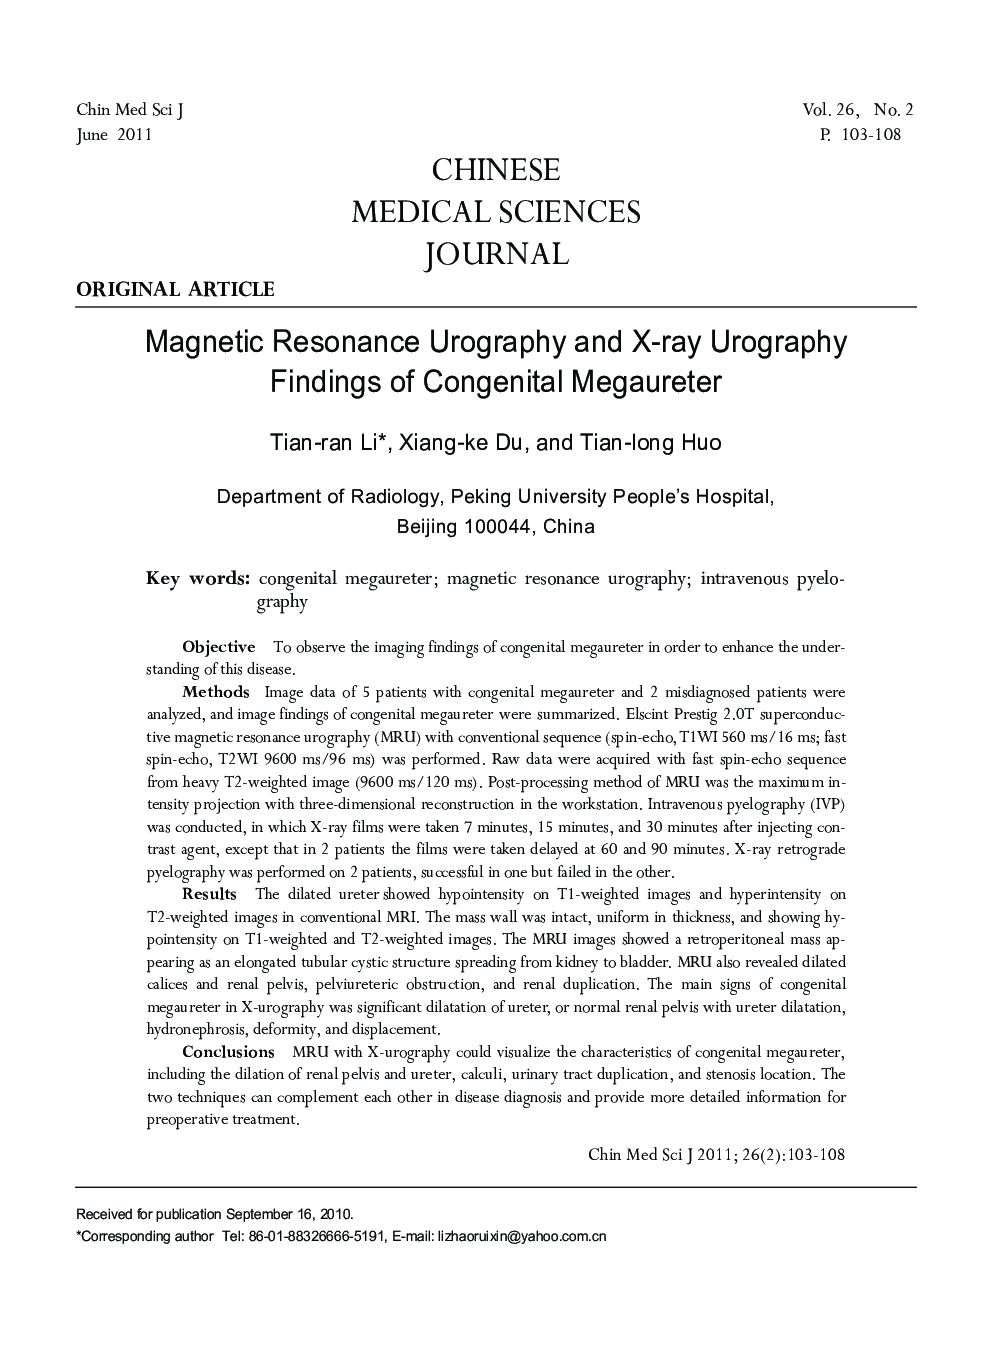 Magnetic Resonance Urography and X-ray Urography Findings of Congenital Megaureter